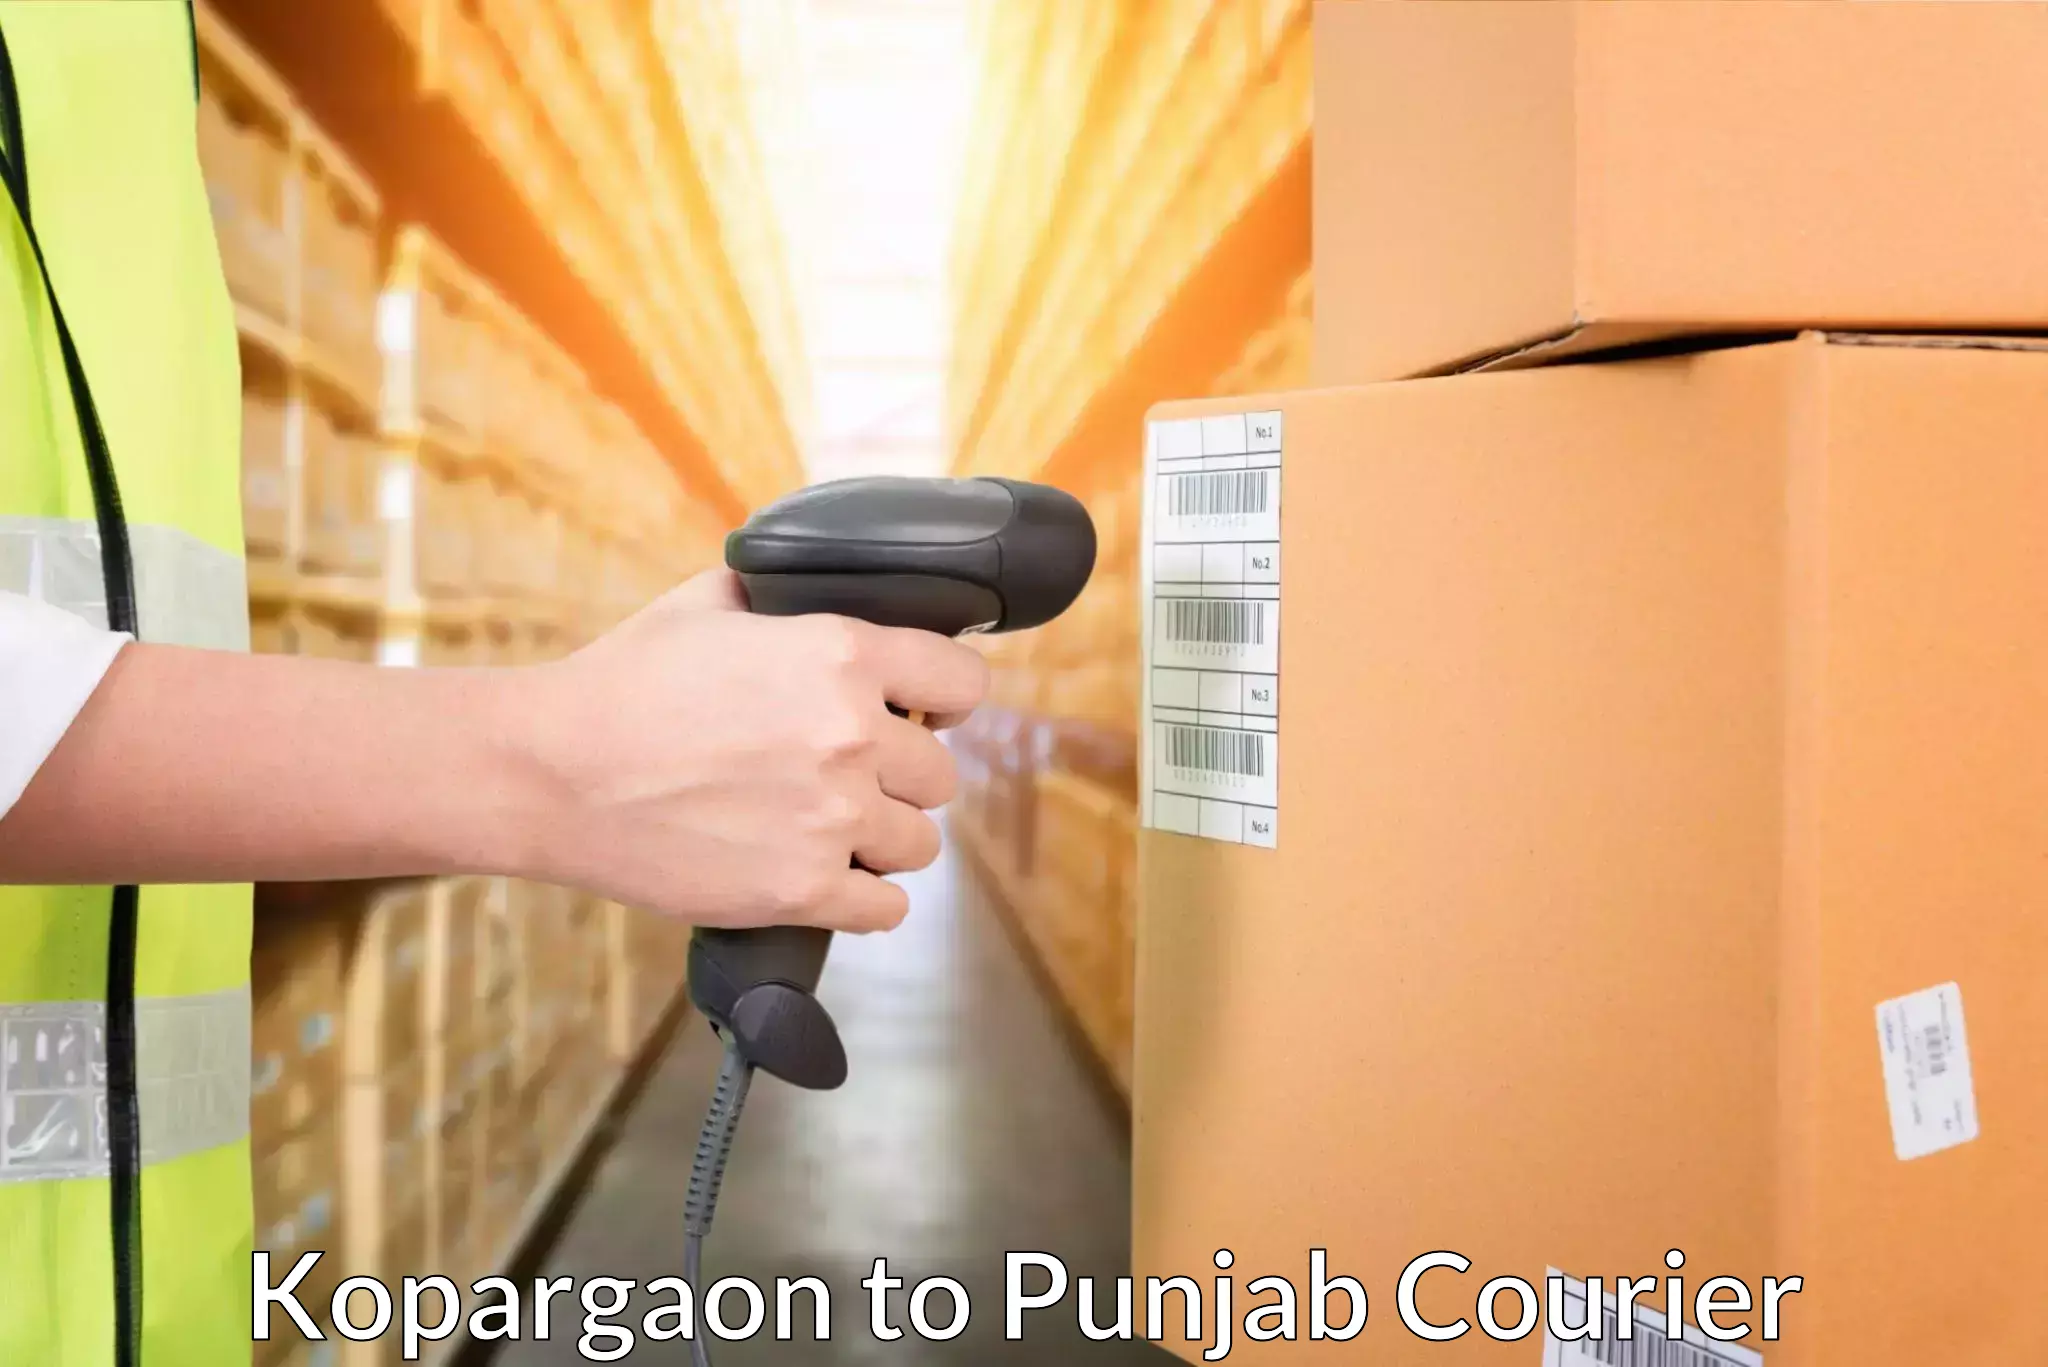 Express logistics providers Kopargaon to Beas